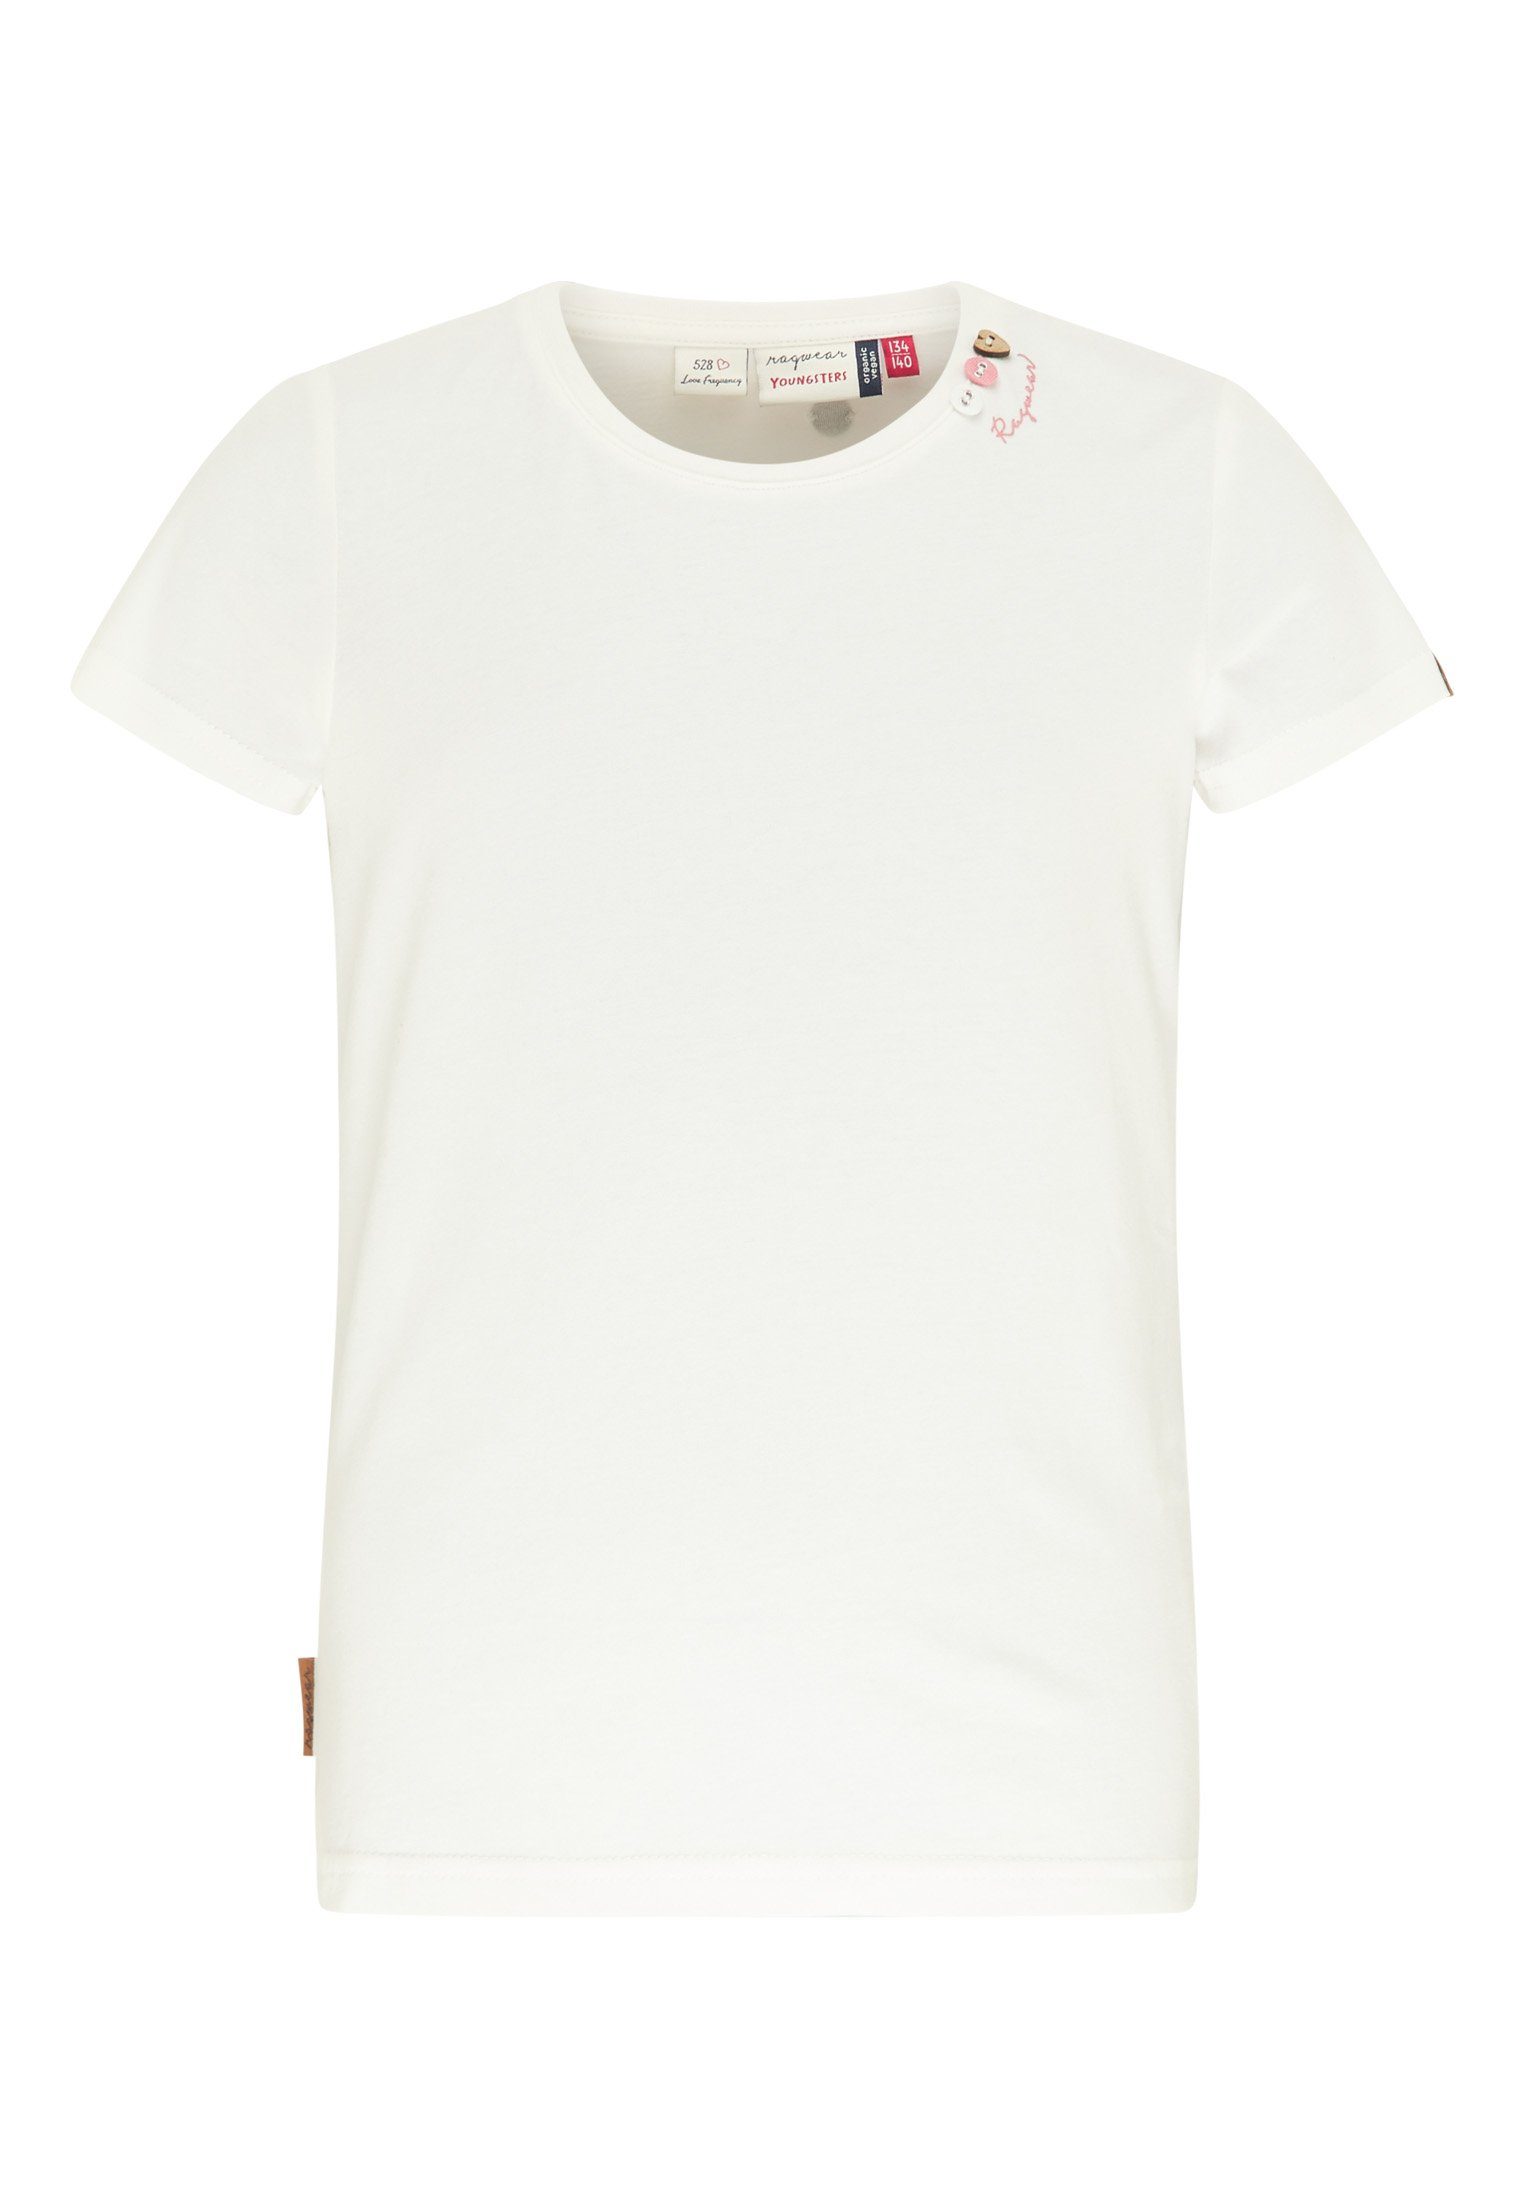 & WHITE T-Shirt Vegane Ragwear Mode VIOLKA Nachhaltige ORGANIC